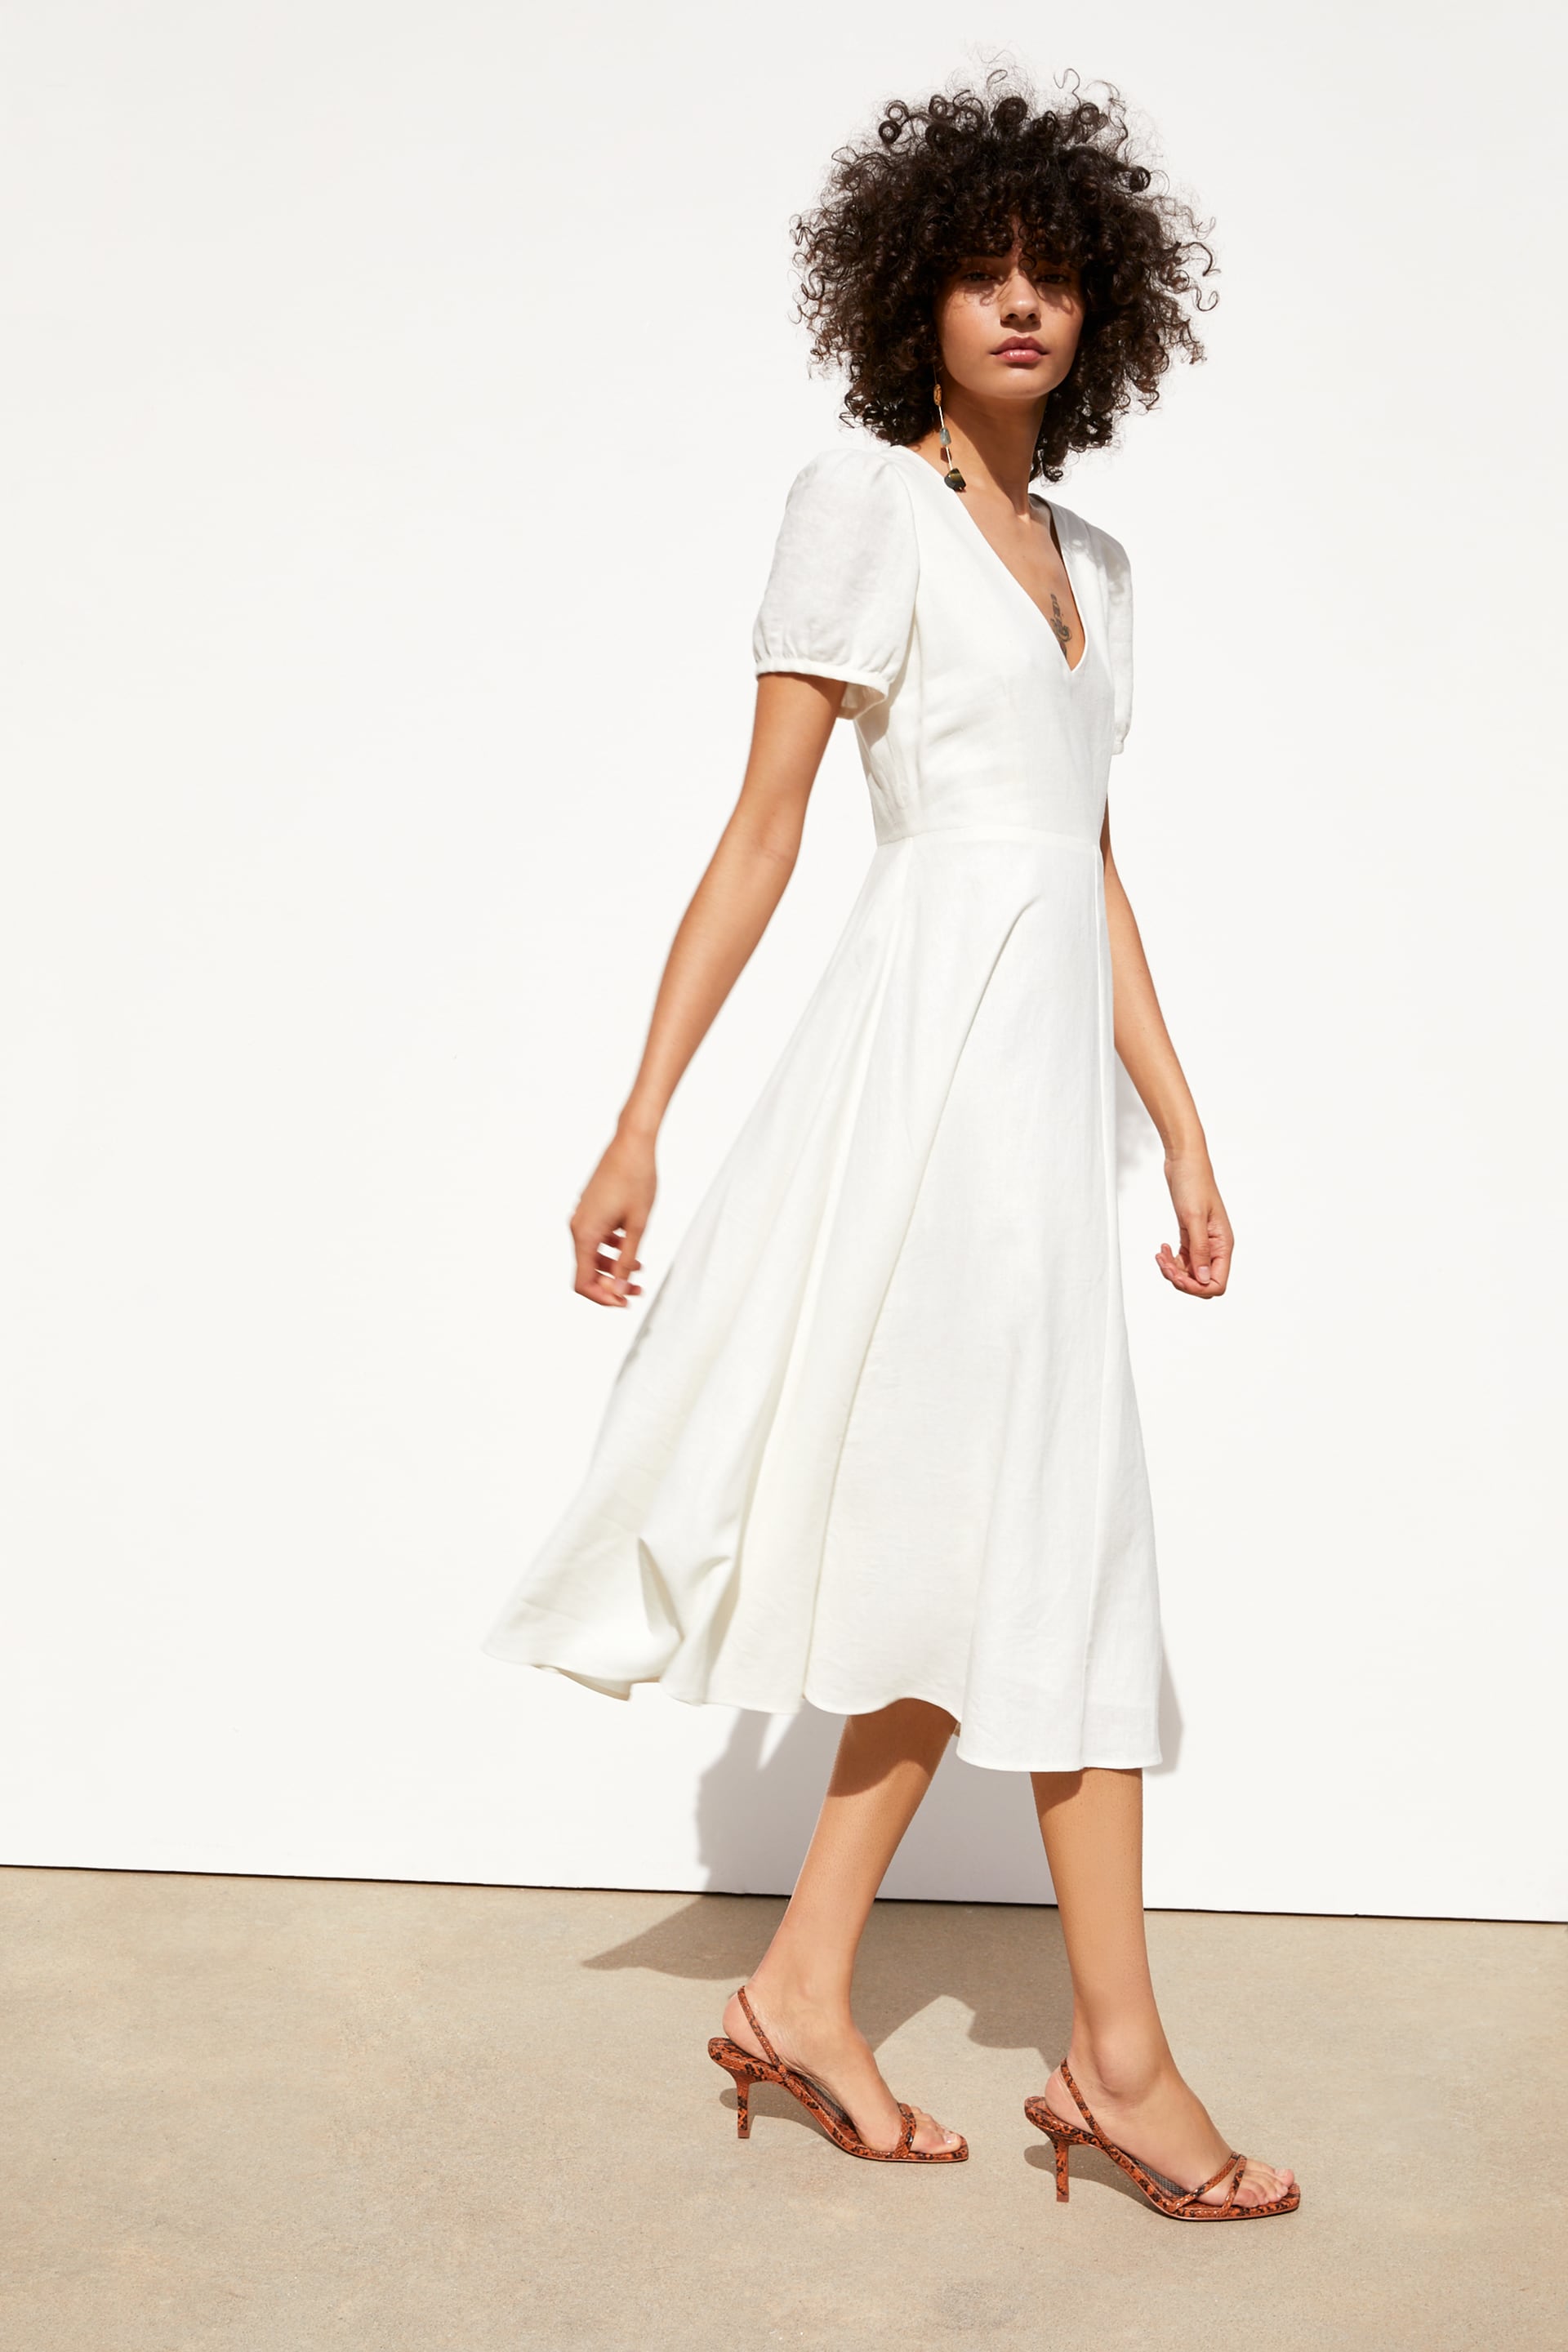 white cotton dress zara